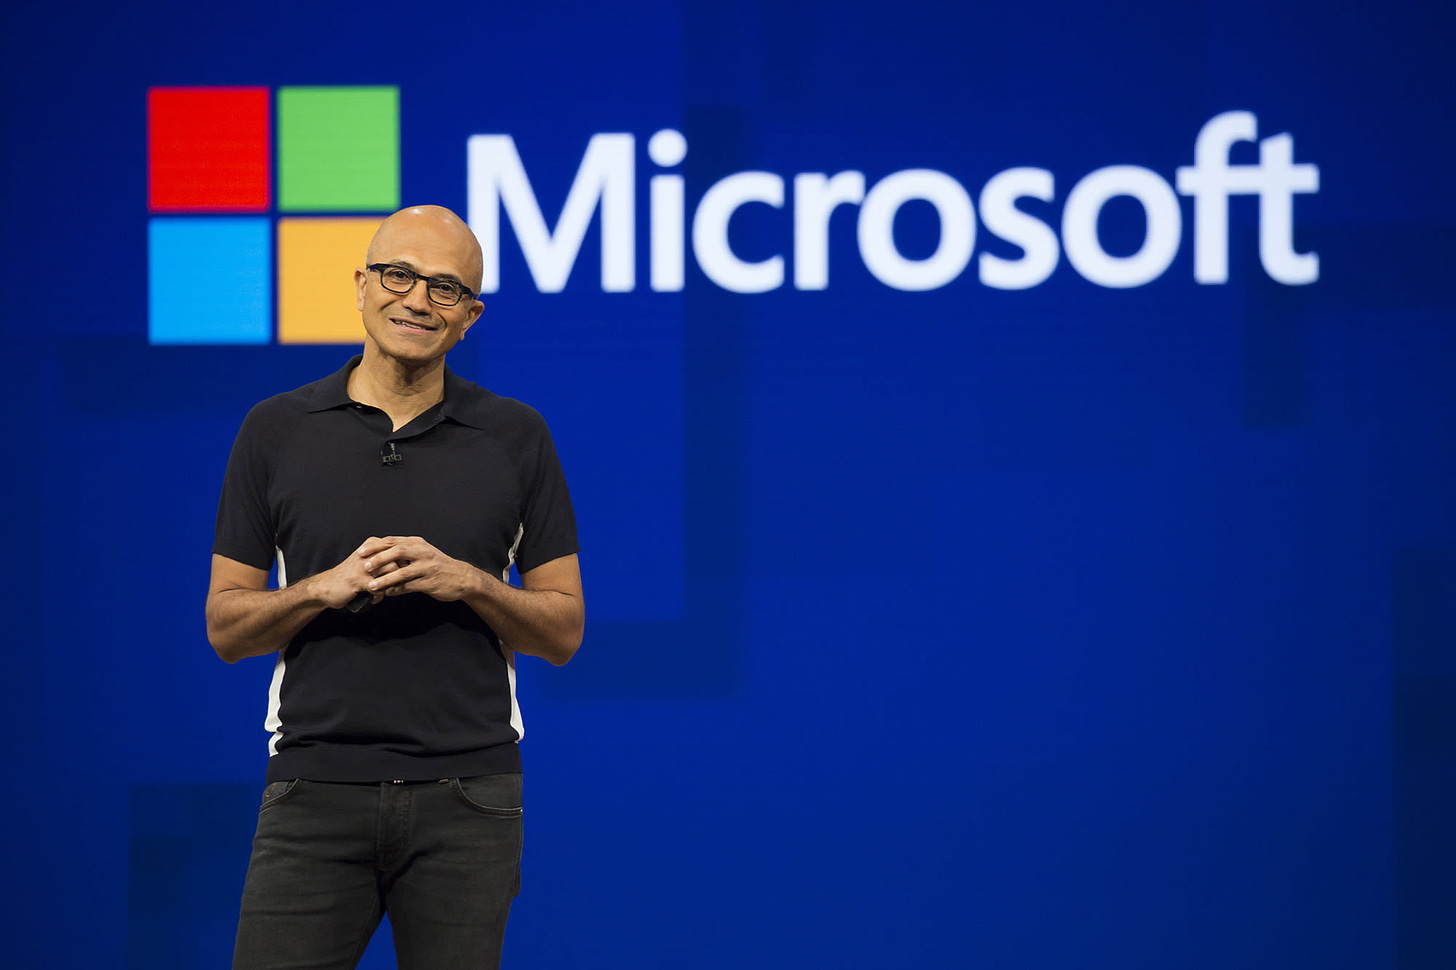 Microsoft CEO Satya Nadella on the advice that shaped his leadership